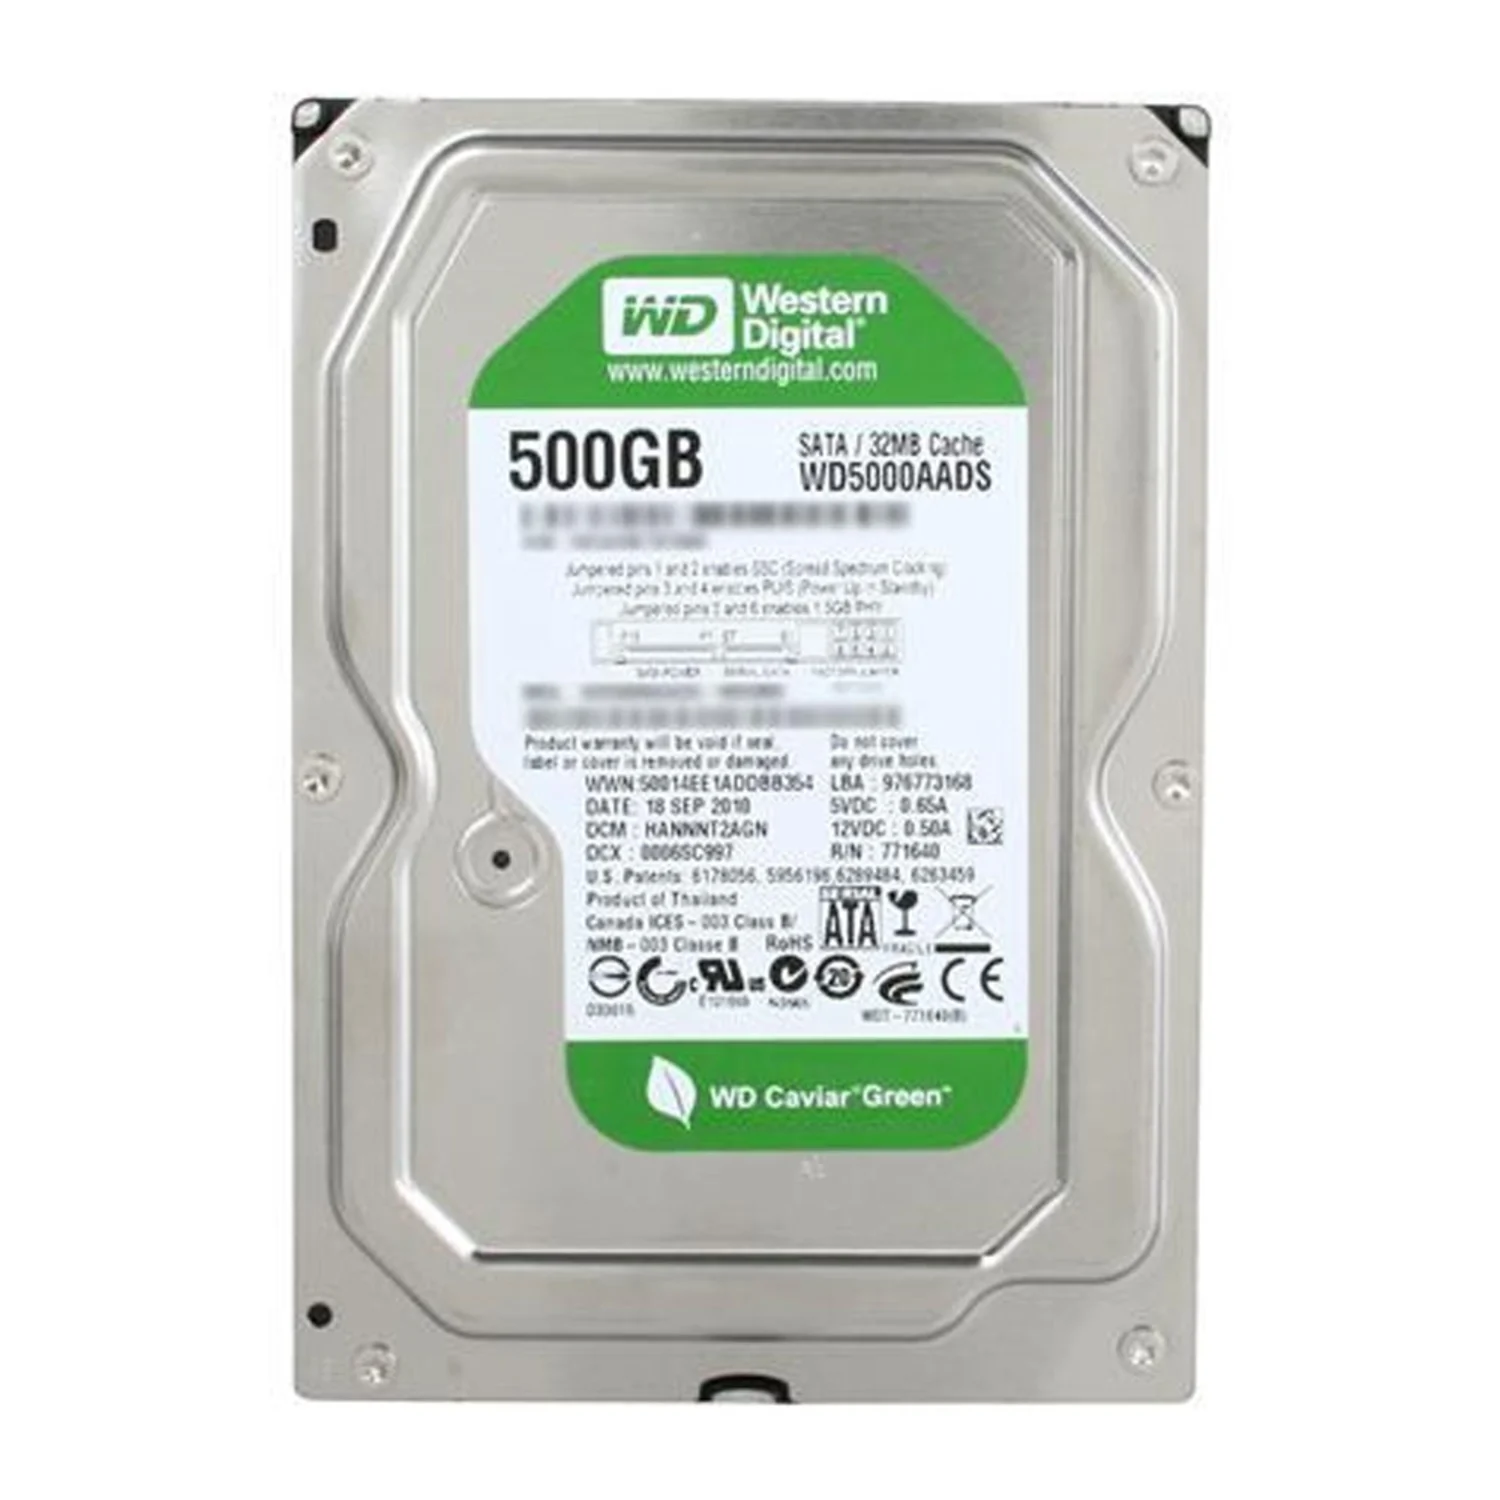 HD Western Digital Pull 500GB/ Sata2 / (WD5000AADS)